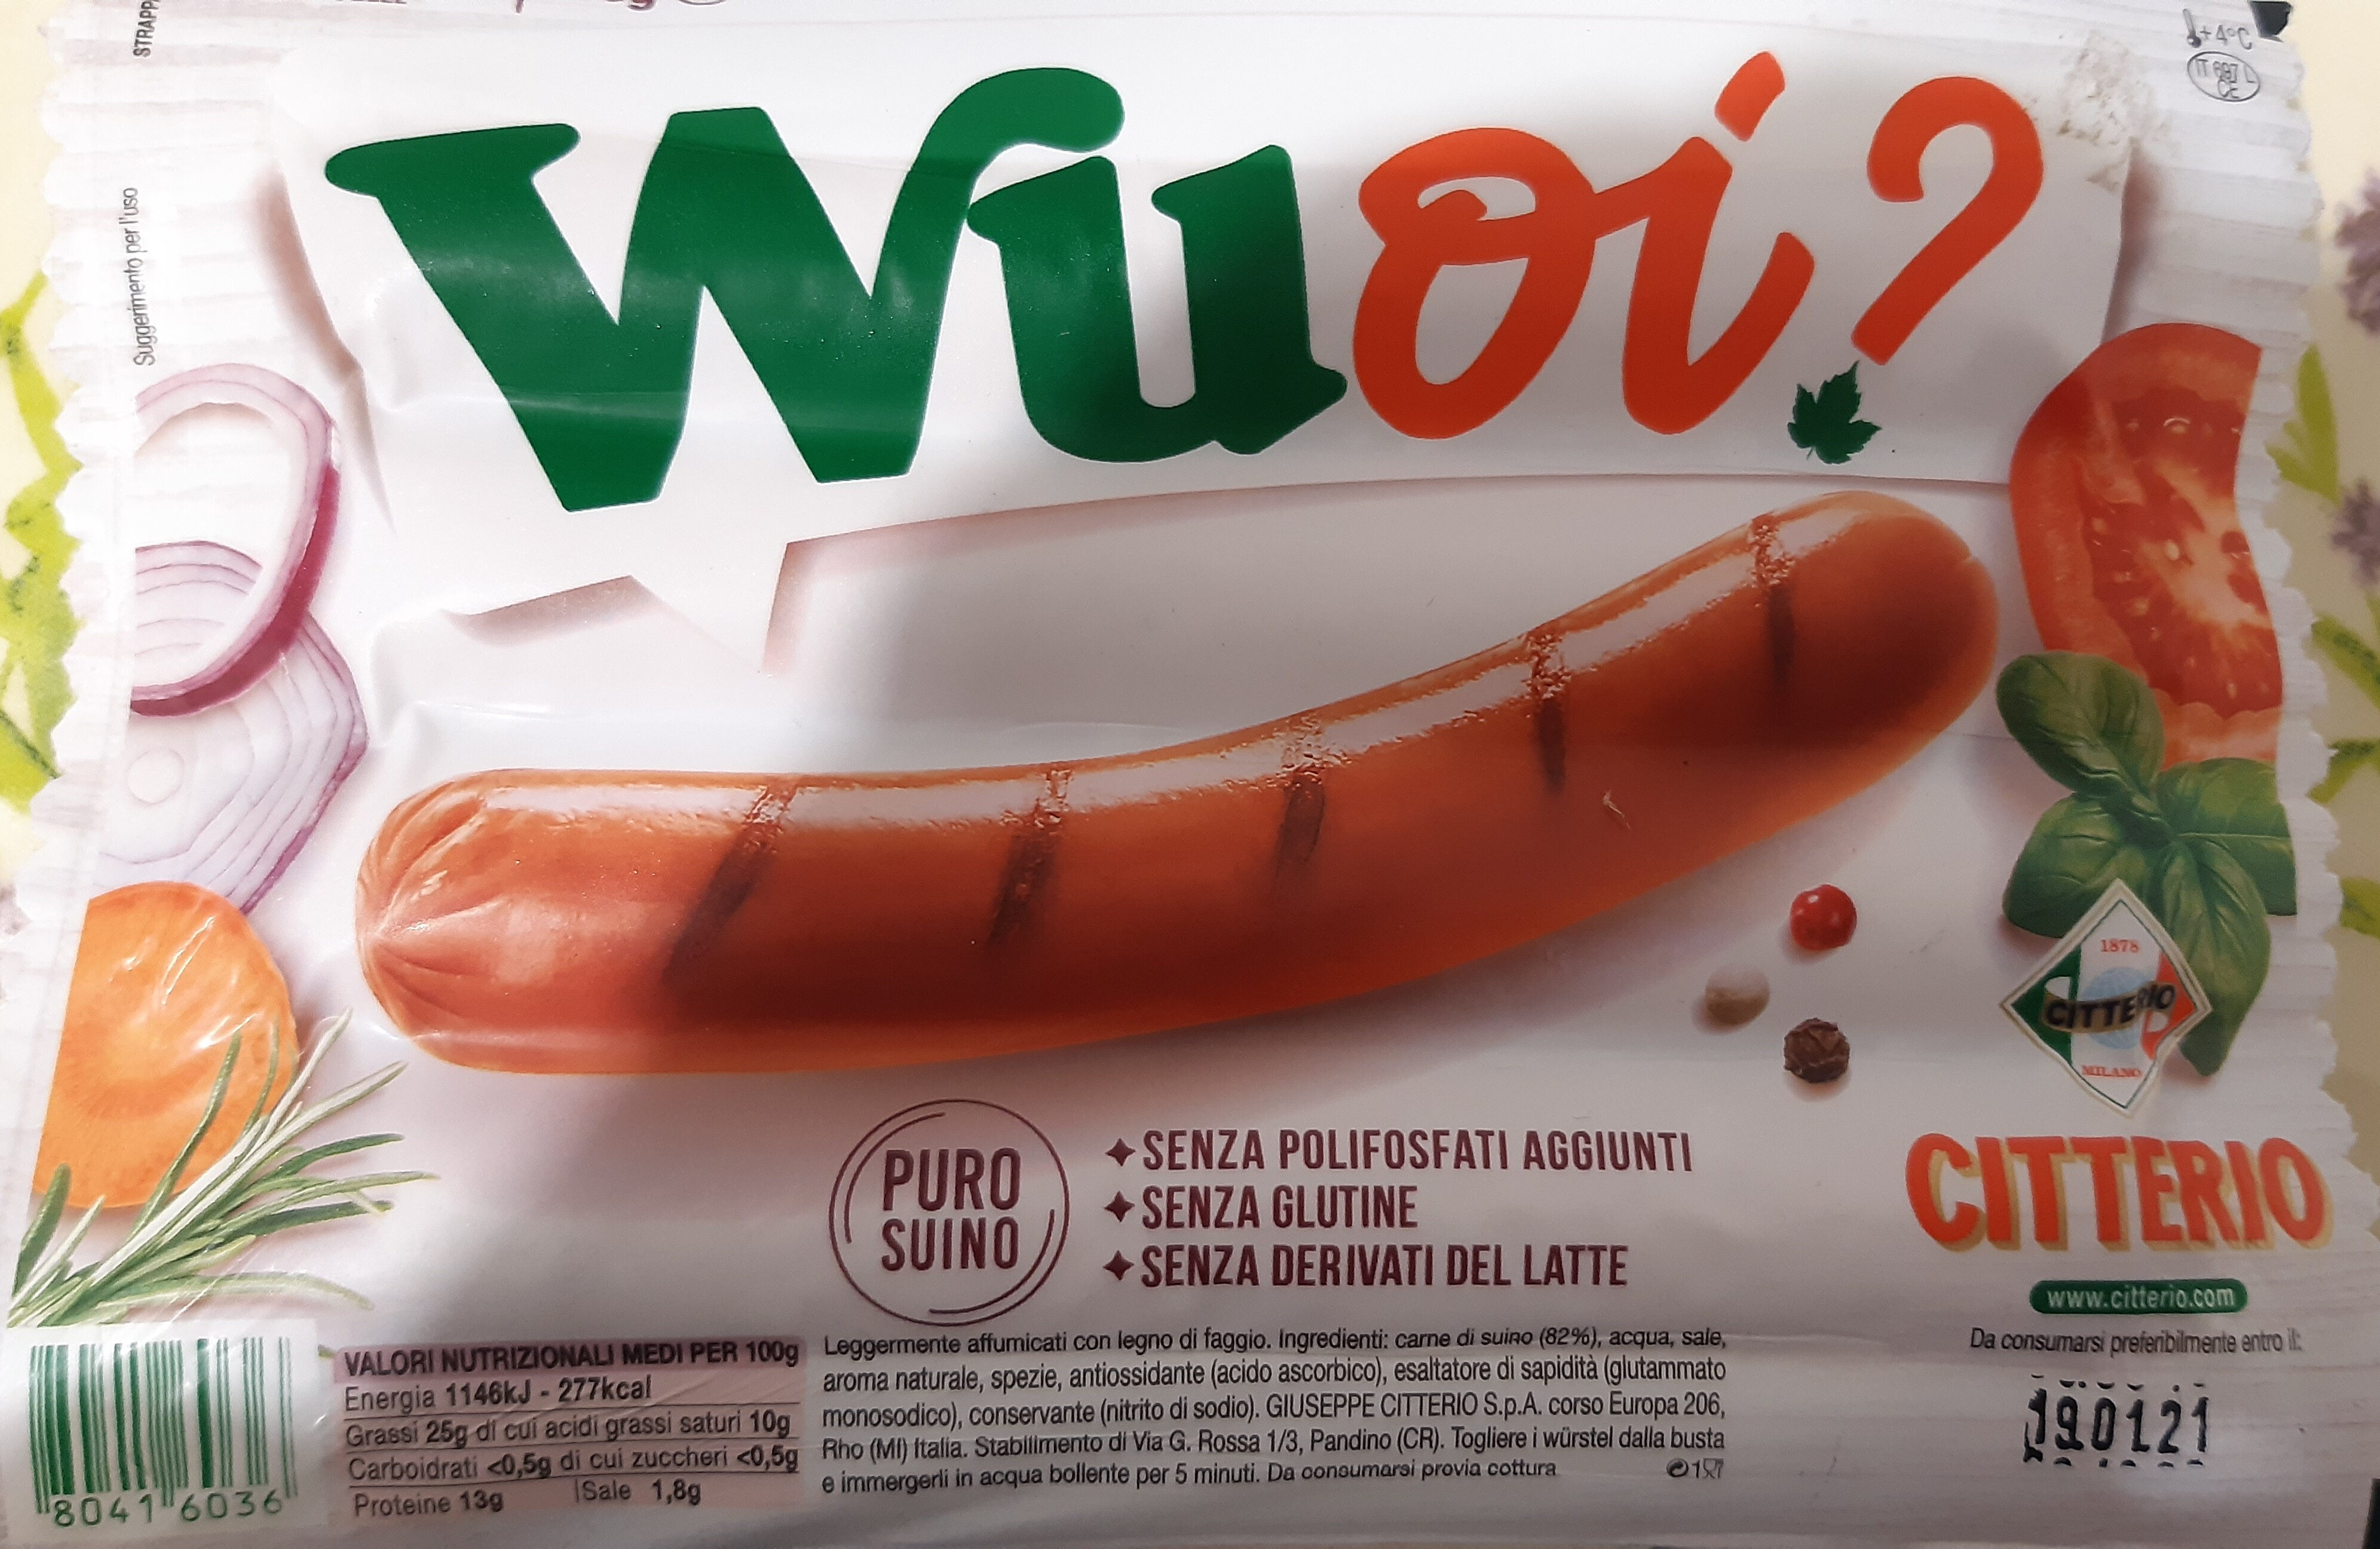 Wuoi? 4 Maxi Würstel Senza Pelle - Produit - it